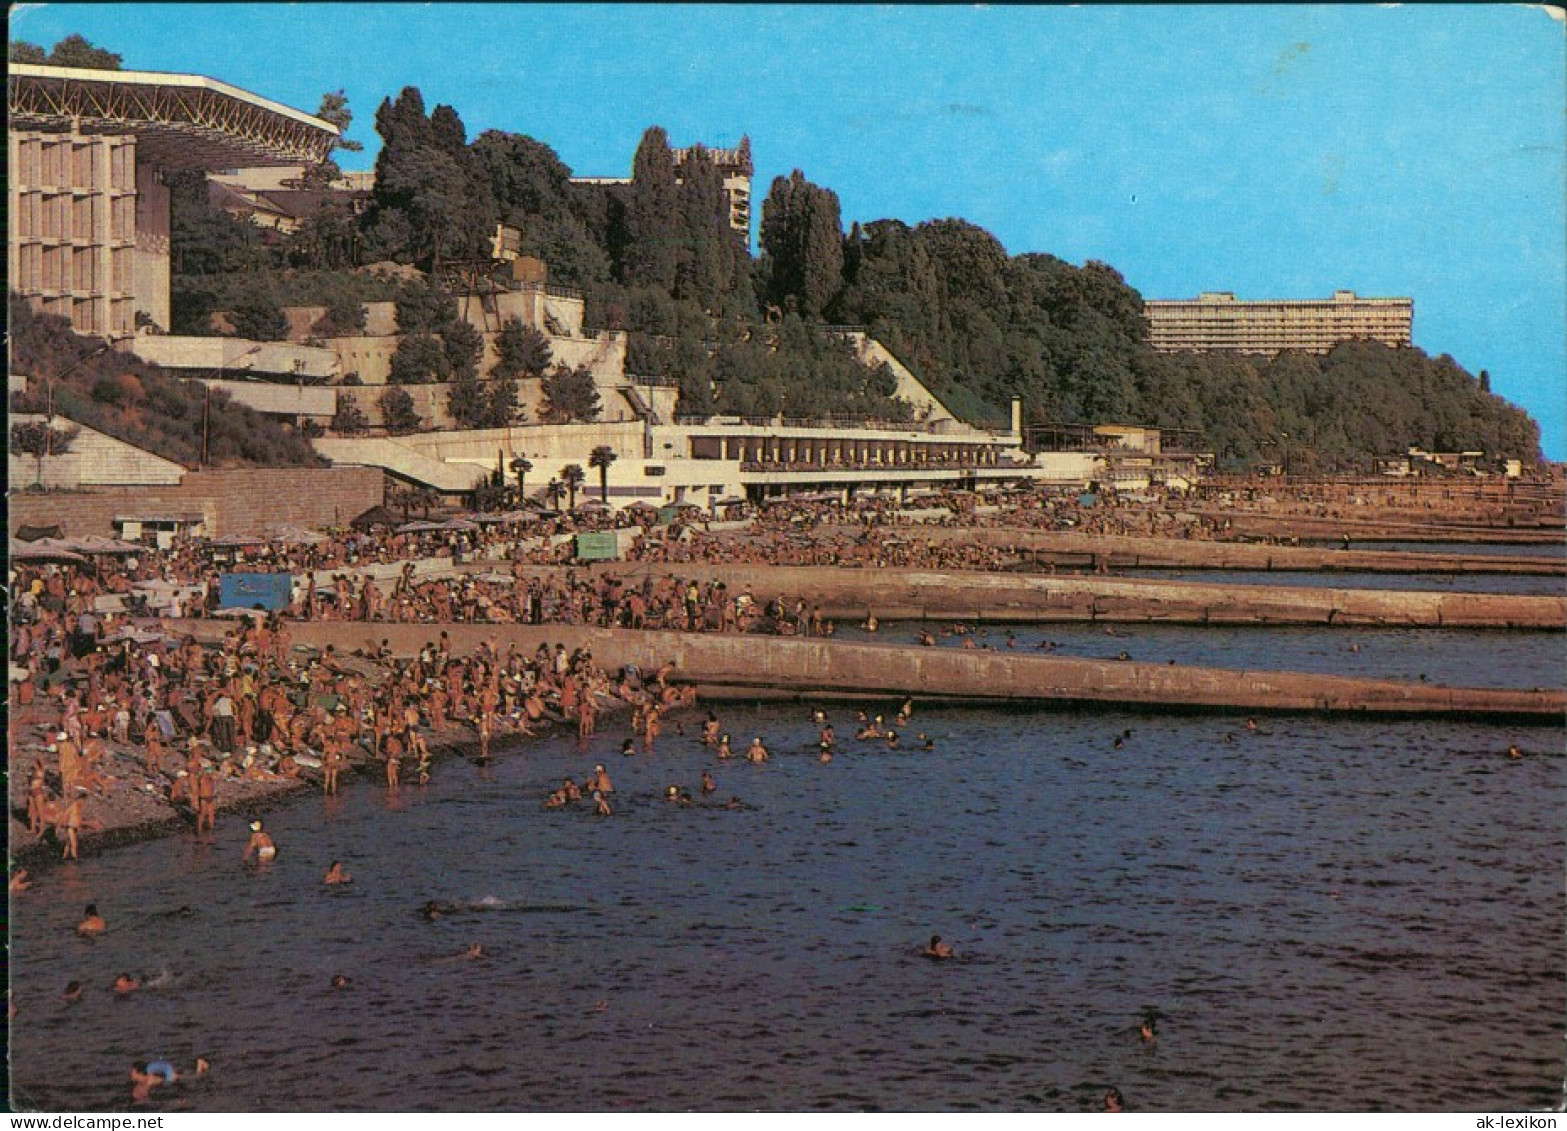 Postcard Sotschi Сочи | სოჭი Hotels Am Strand 1982 - Russie